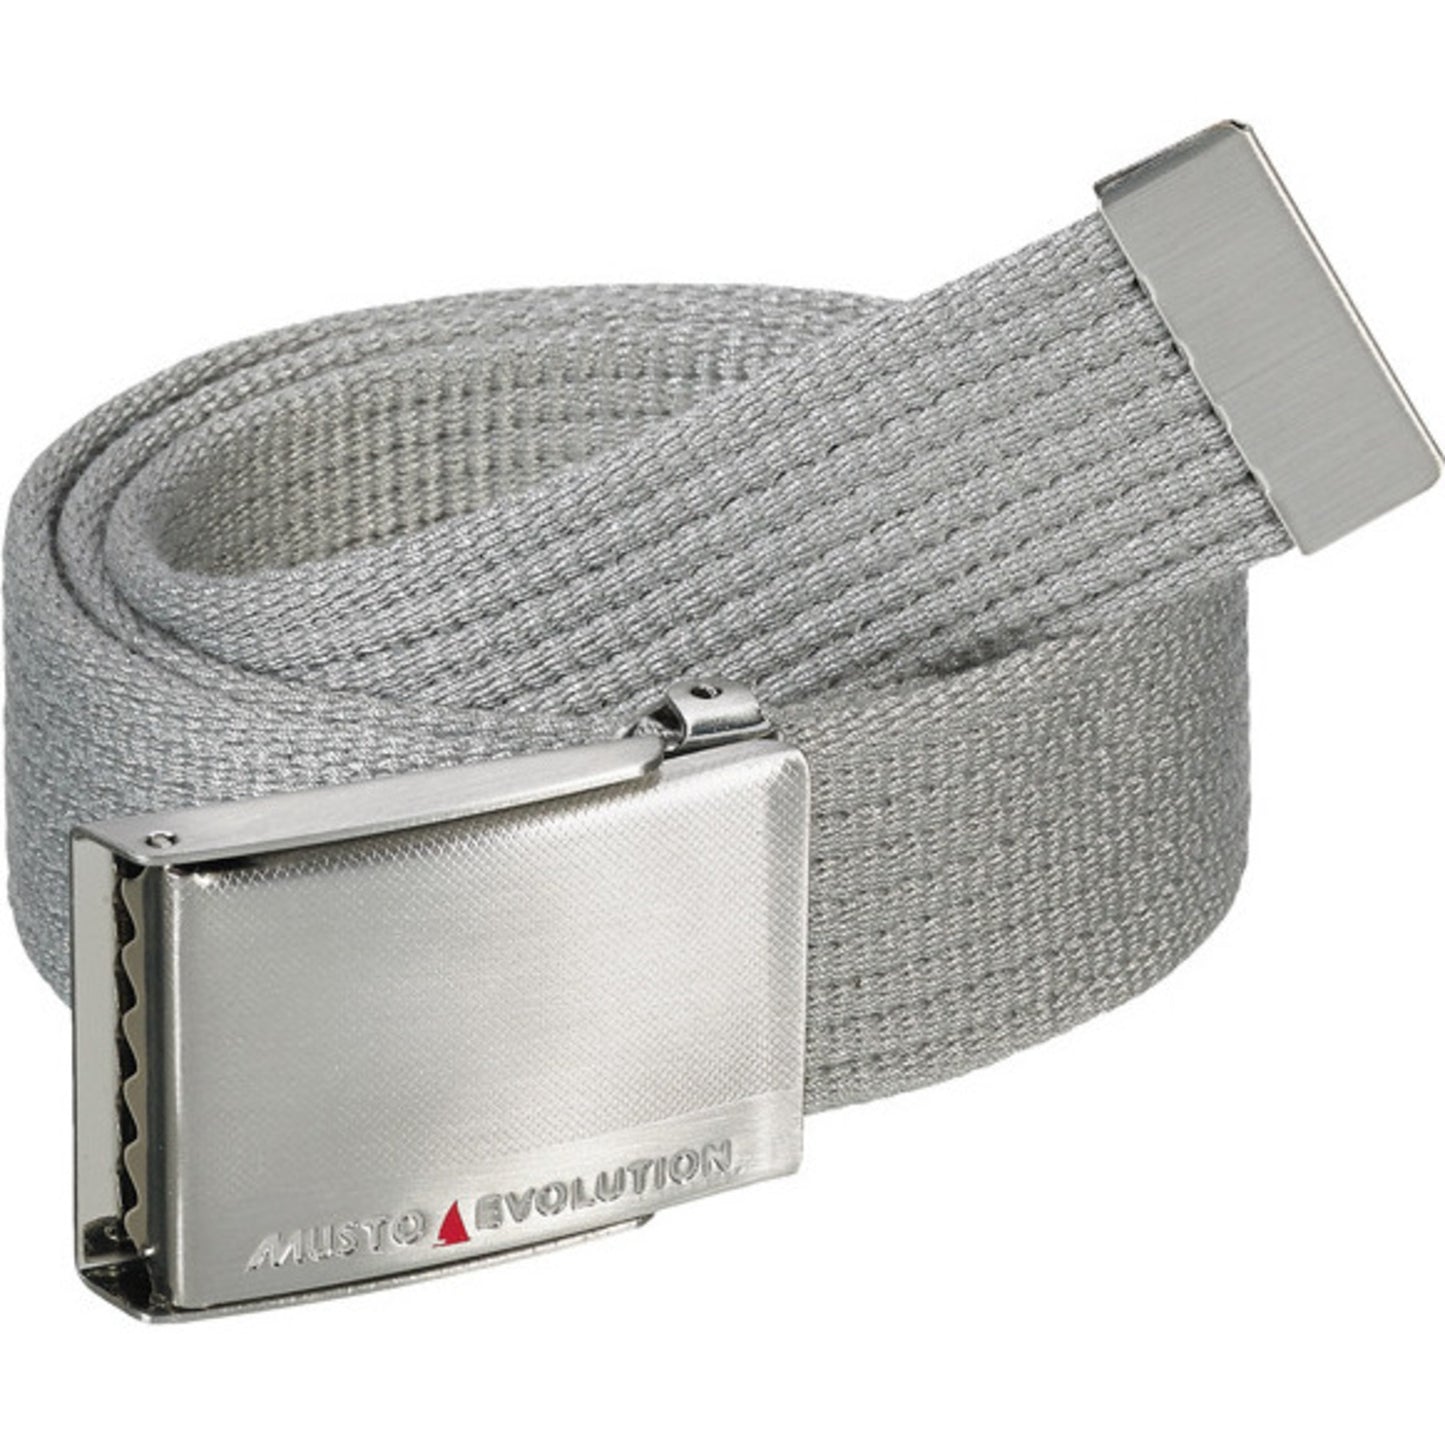 Musto ceinture Steel L/XL